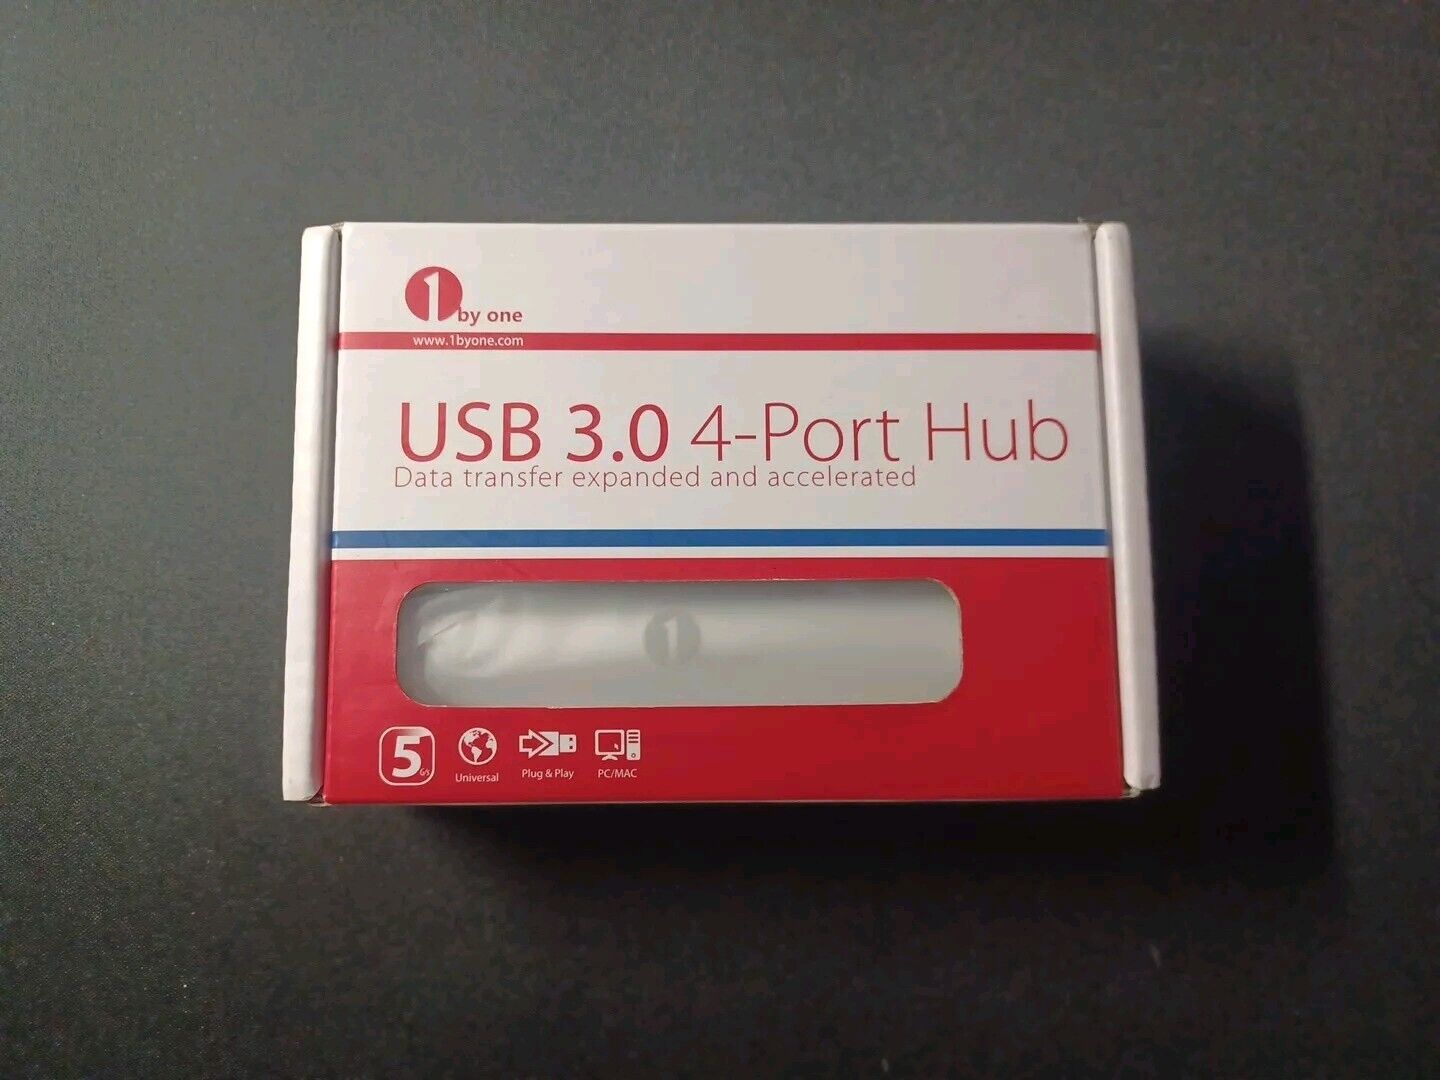 1 by One USB 3.0 | 4-Port Hub